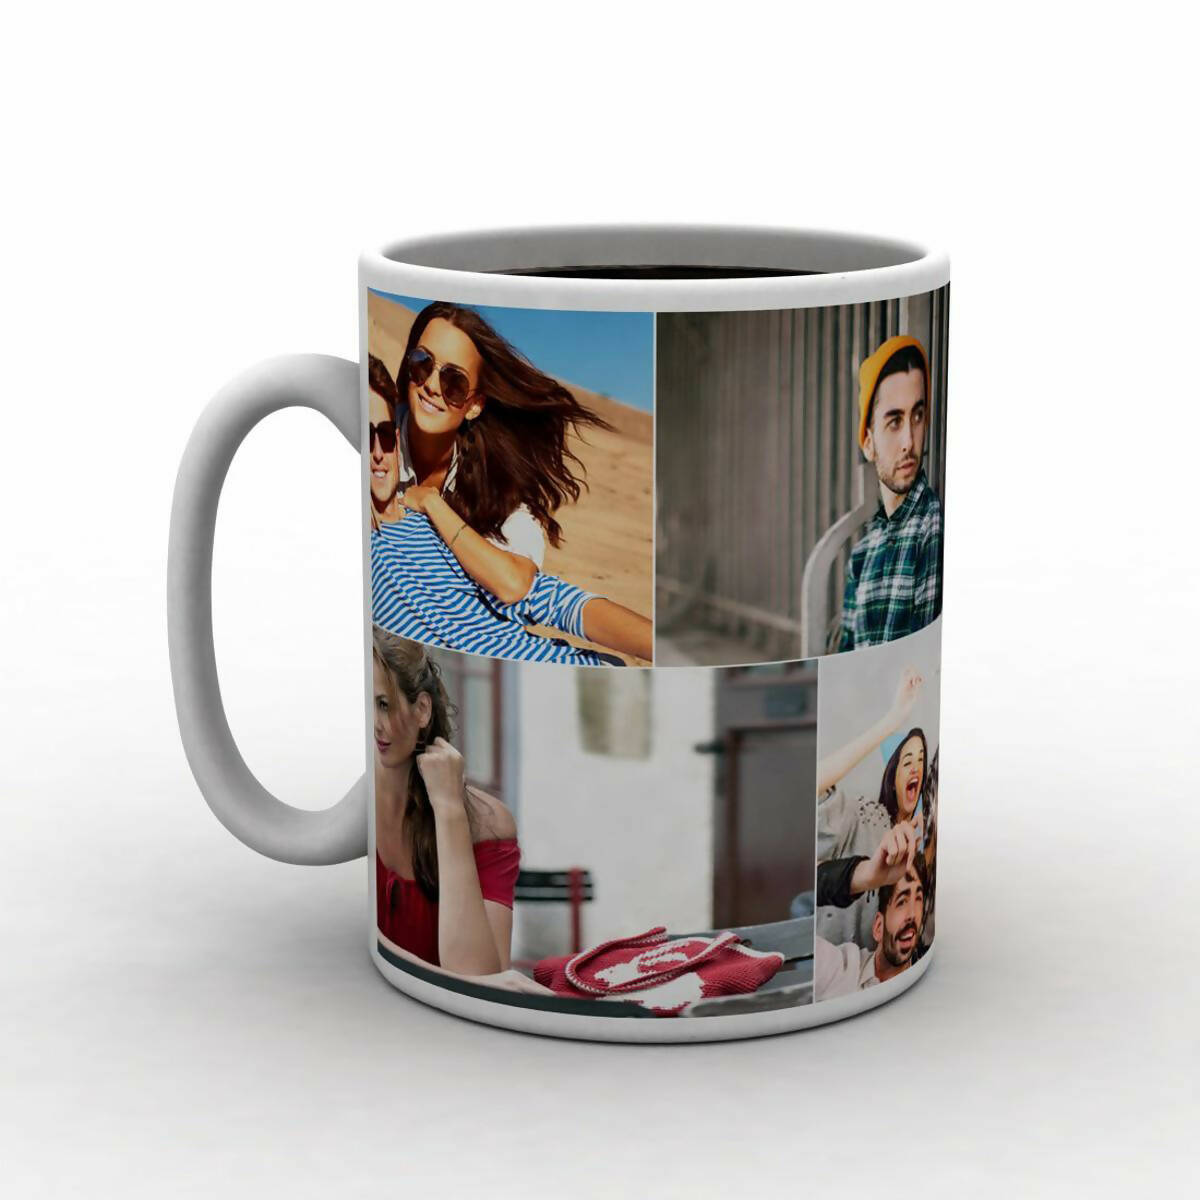 3D Mug With Text, Logo, or Photo